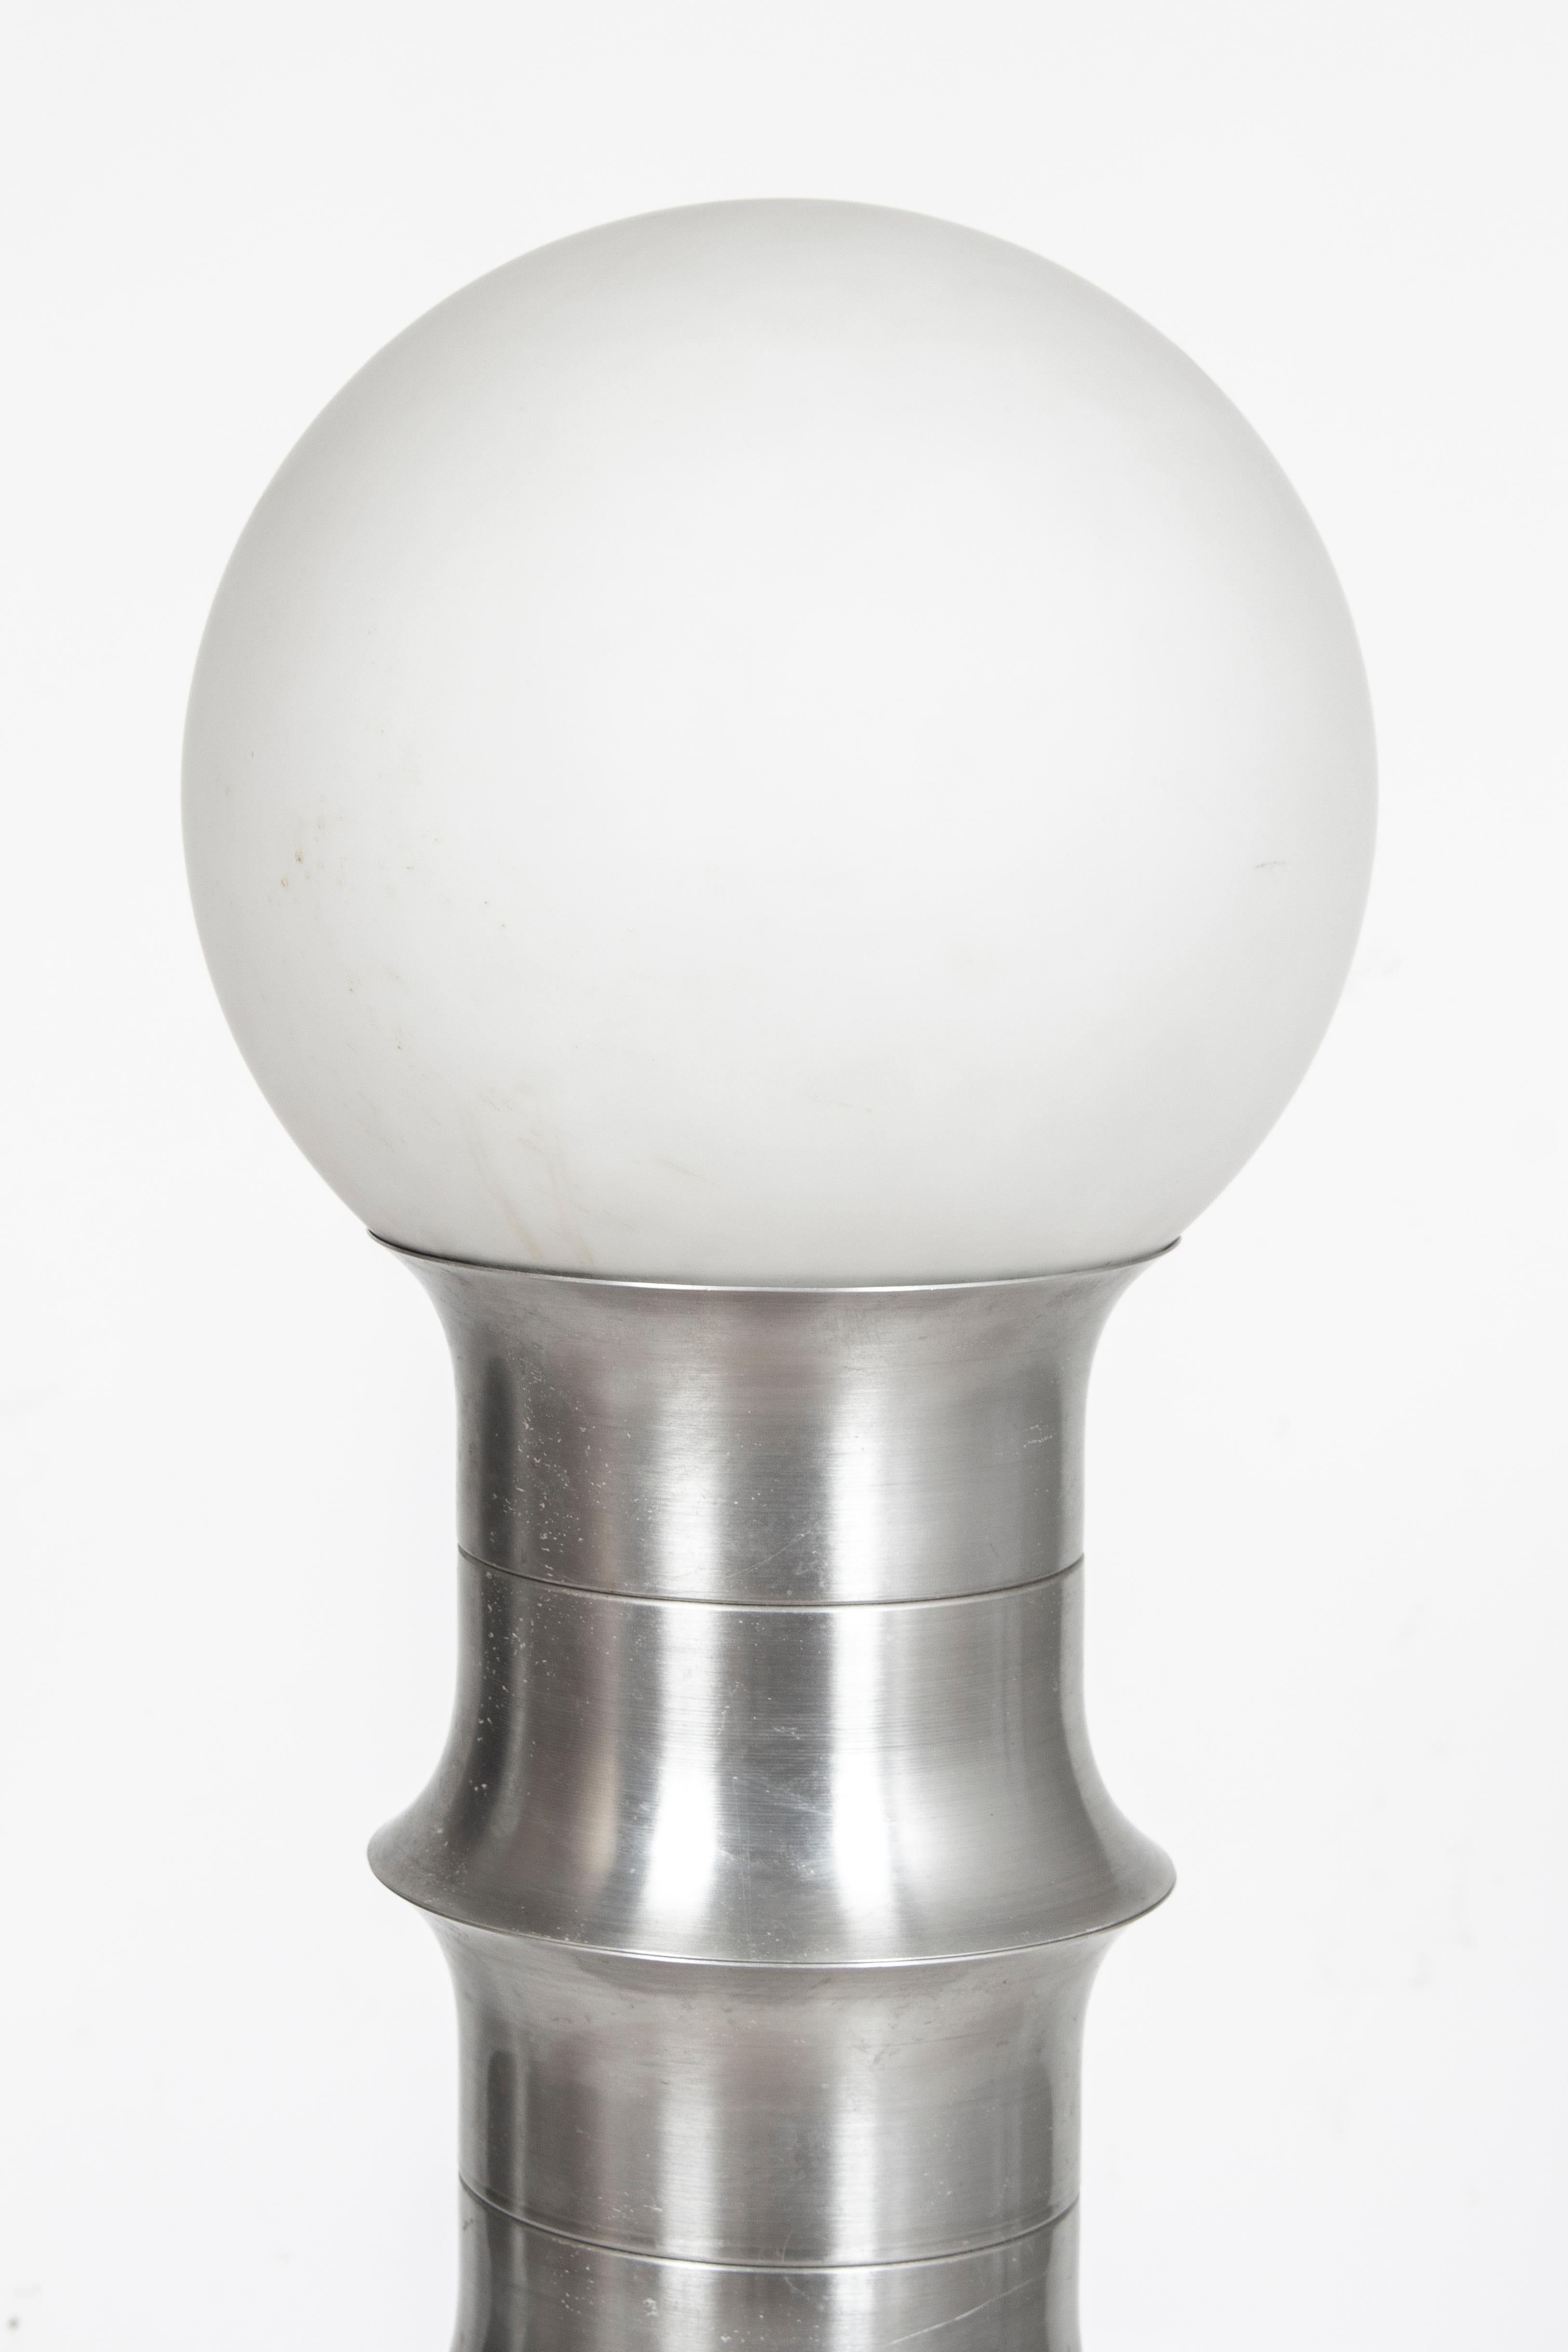 Rare Industrial Design Column Floor Lamp from 1965 1